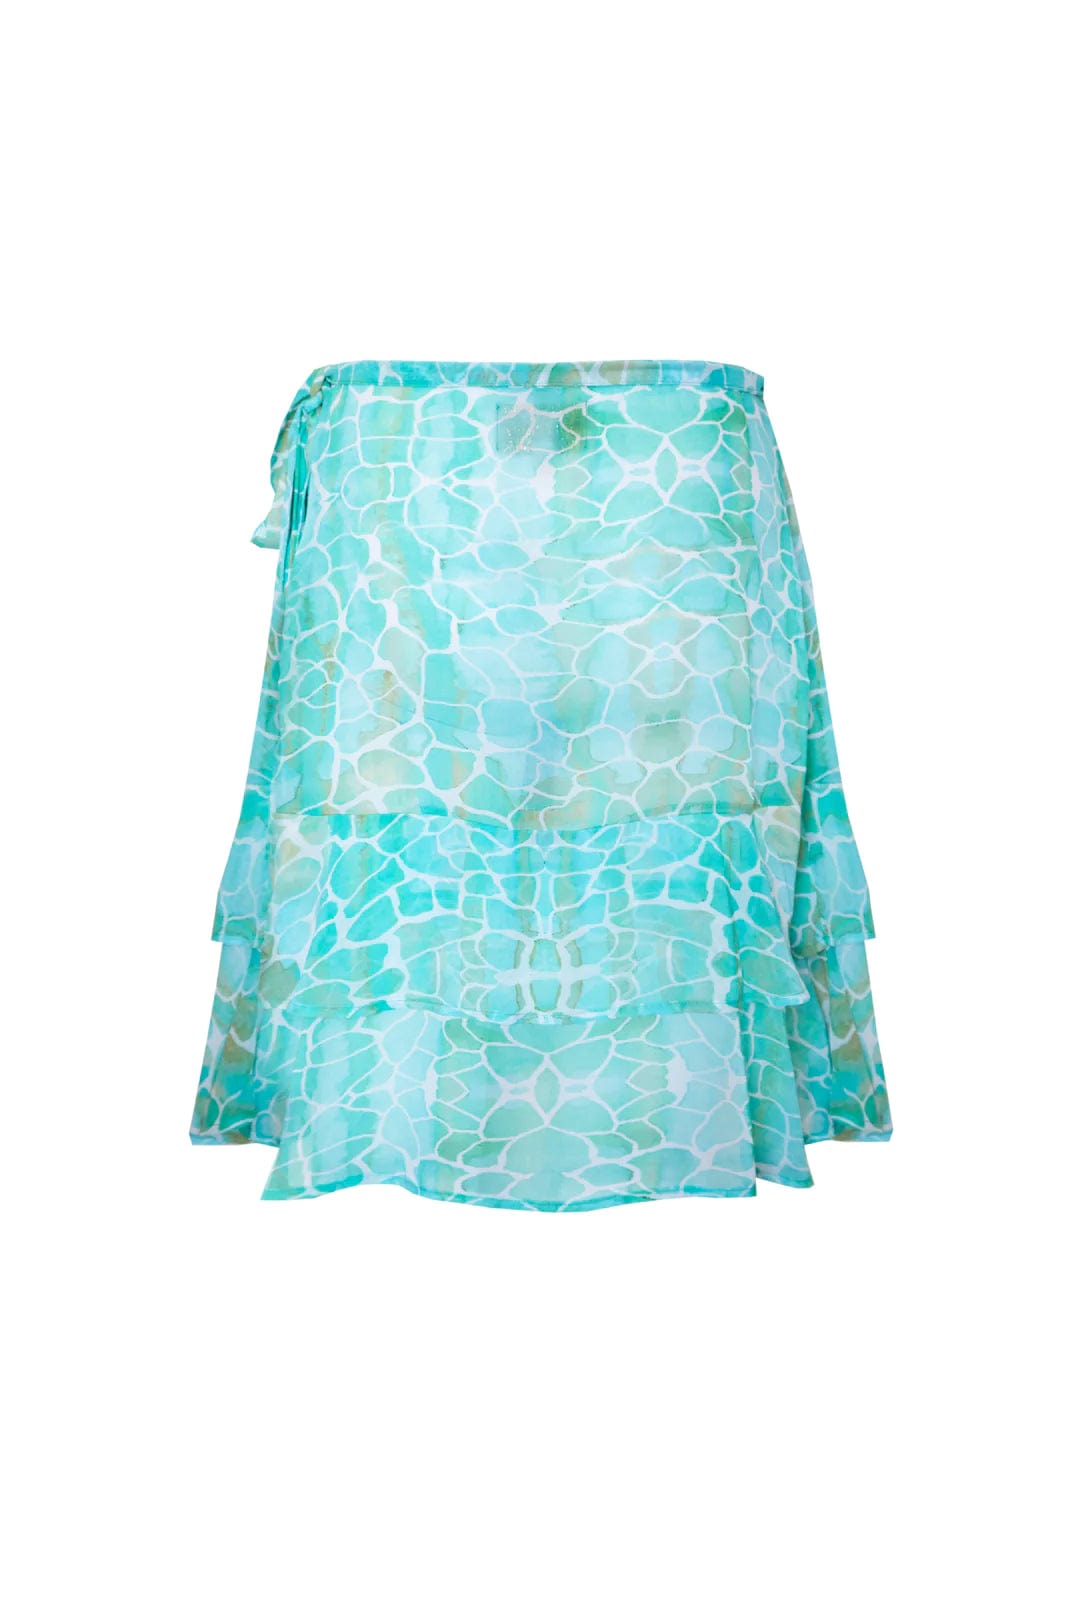 Sophia Alexia S Aqua Pebbles Tahiti Wrap Skirt